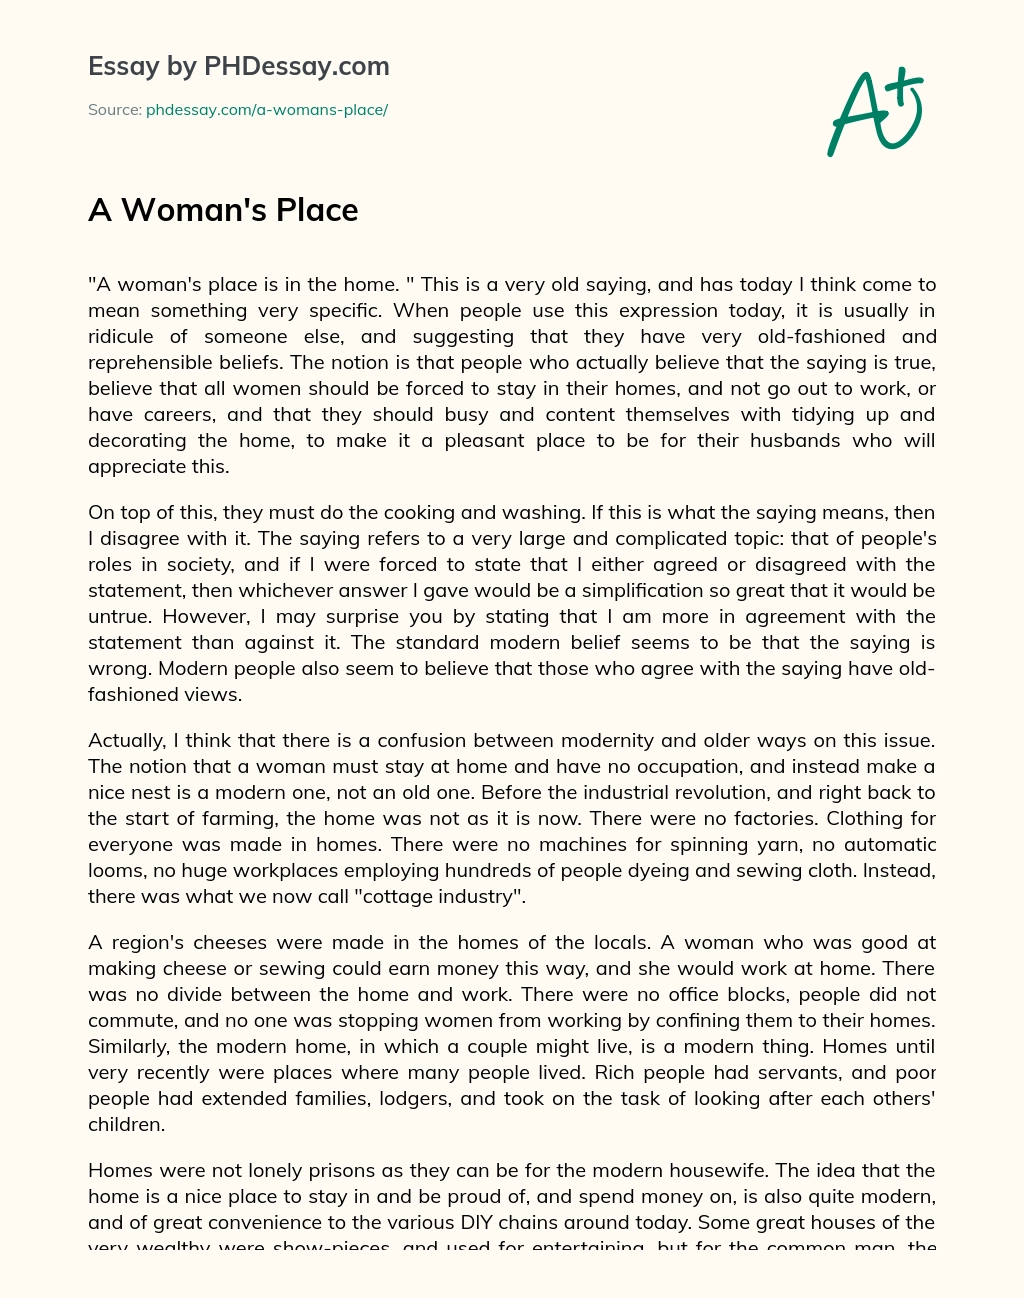 A Woman’s Place essay